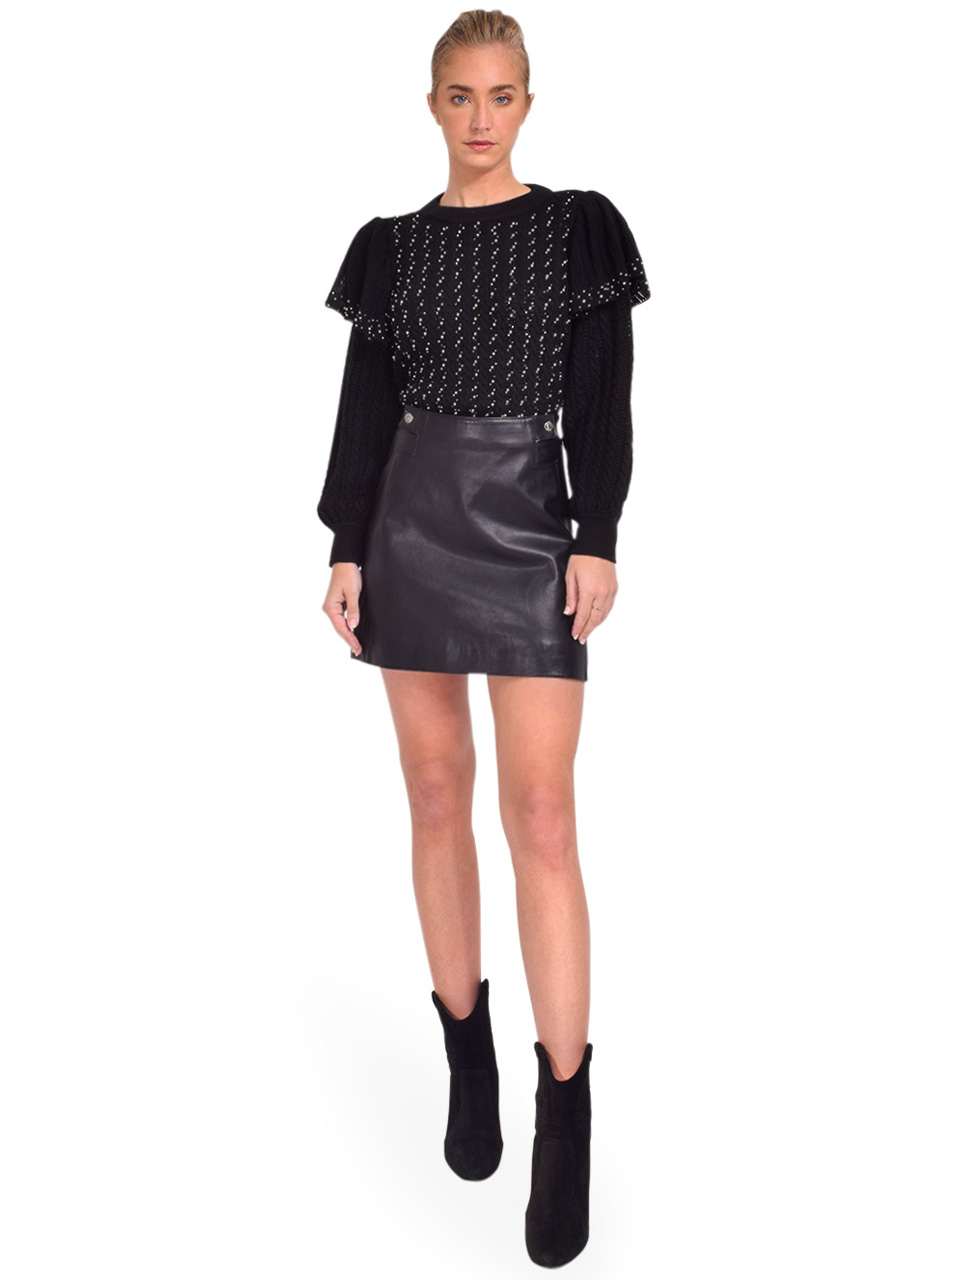 Alice + Olivia Rosi Ruffle Sleeve Sweater in Black Full Outfit 